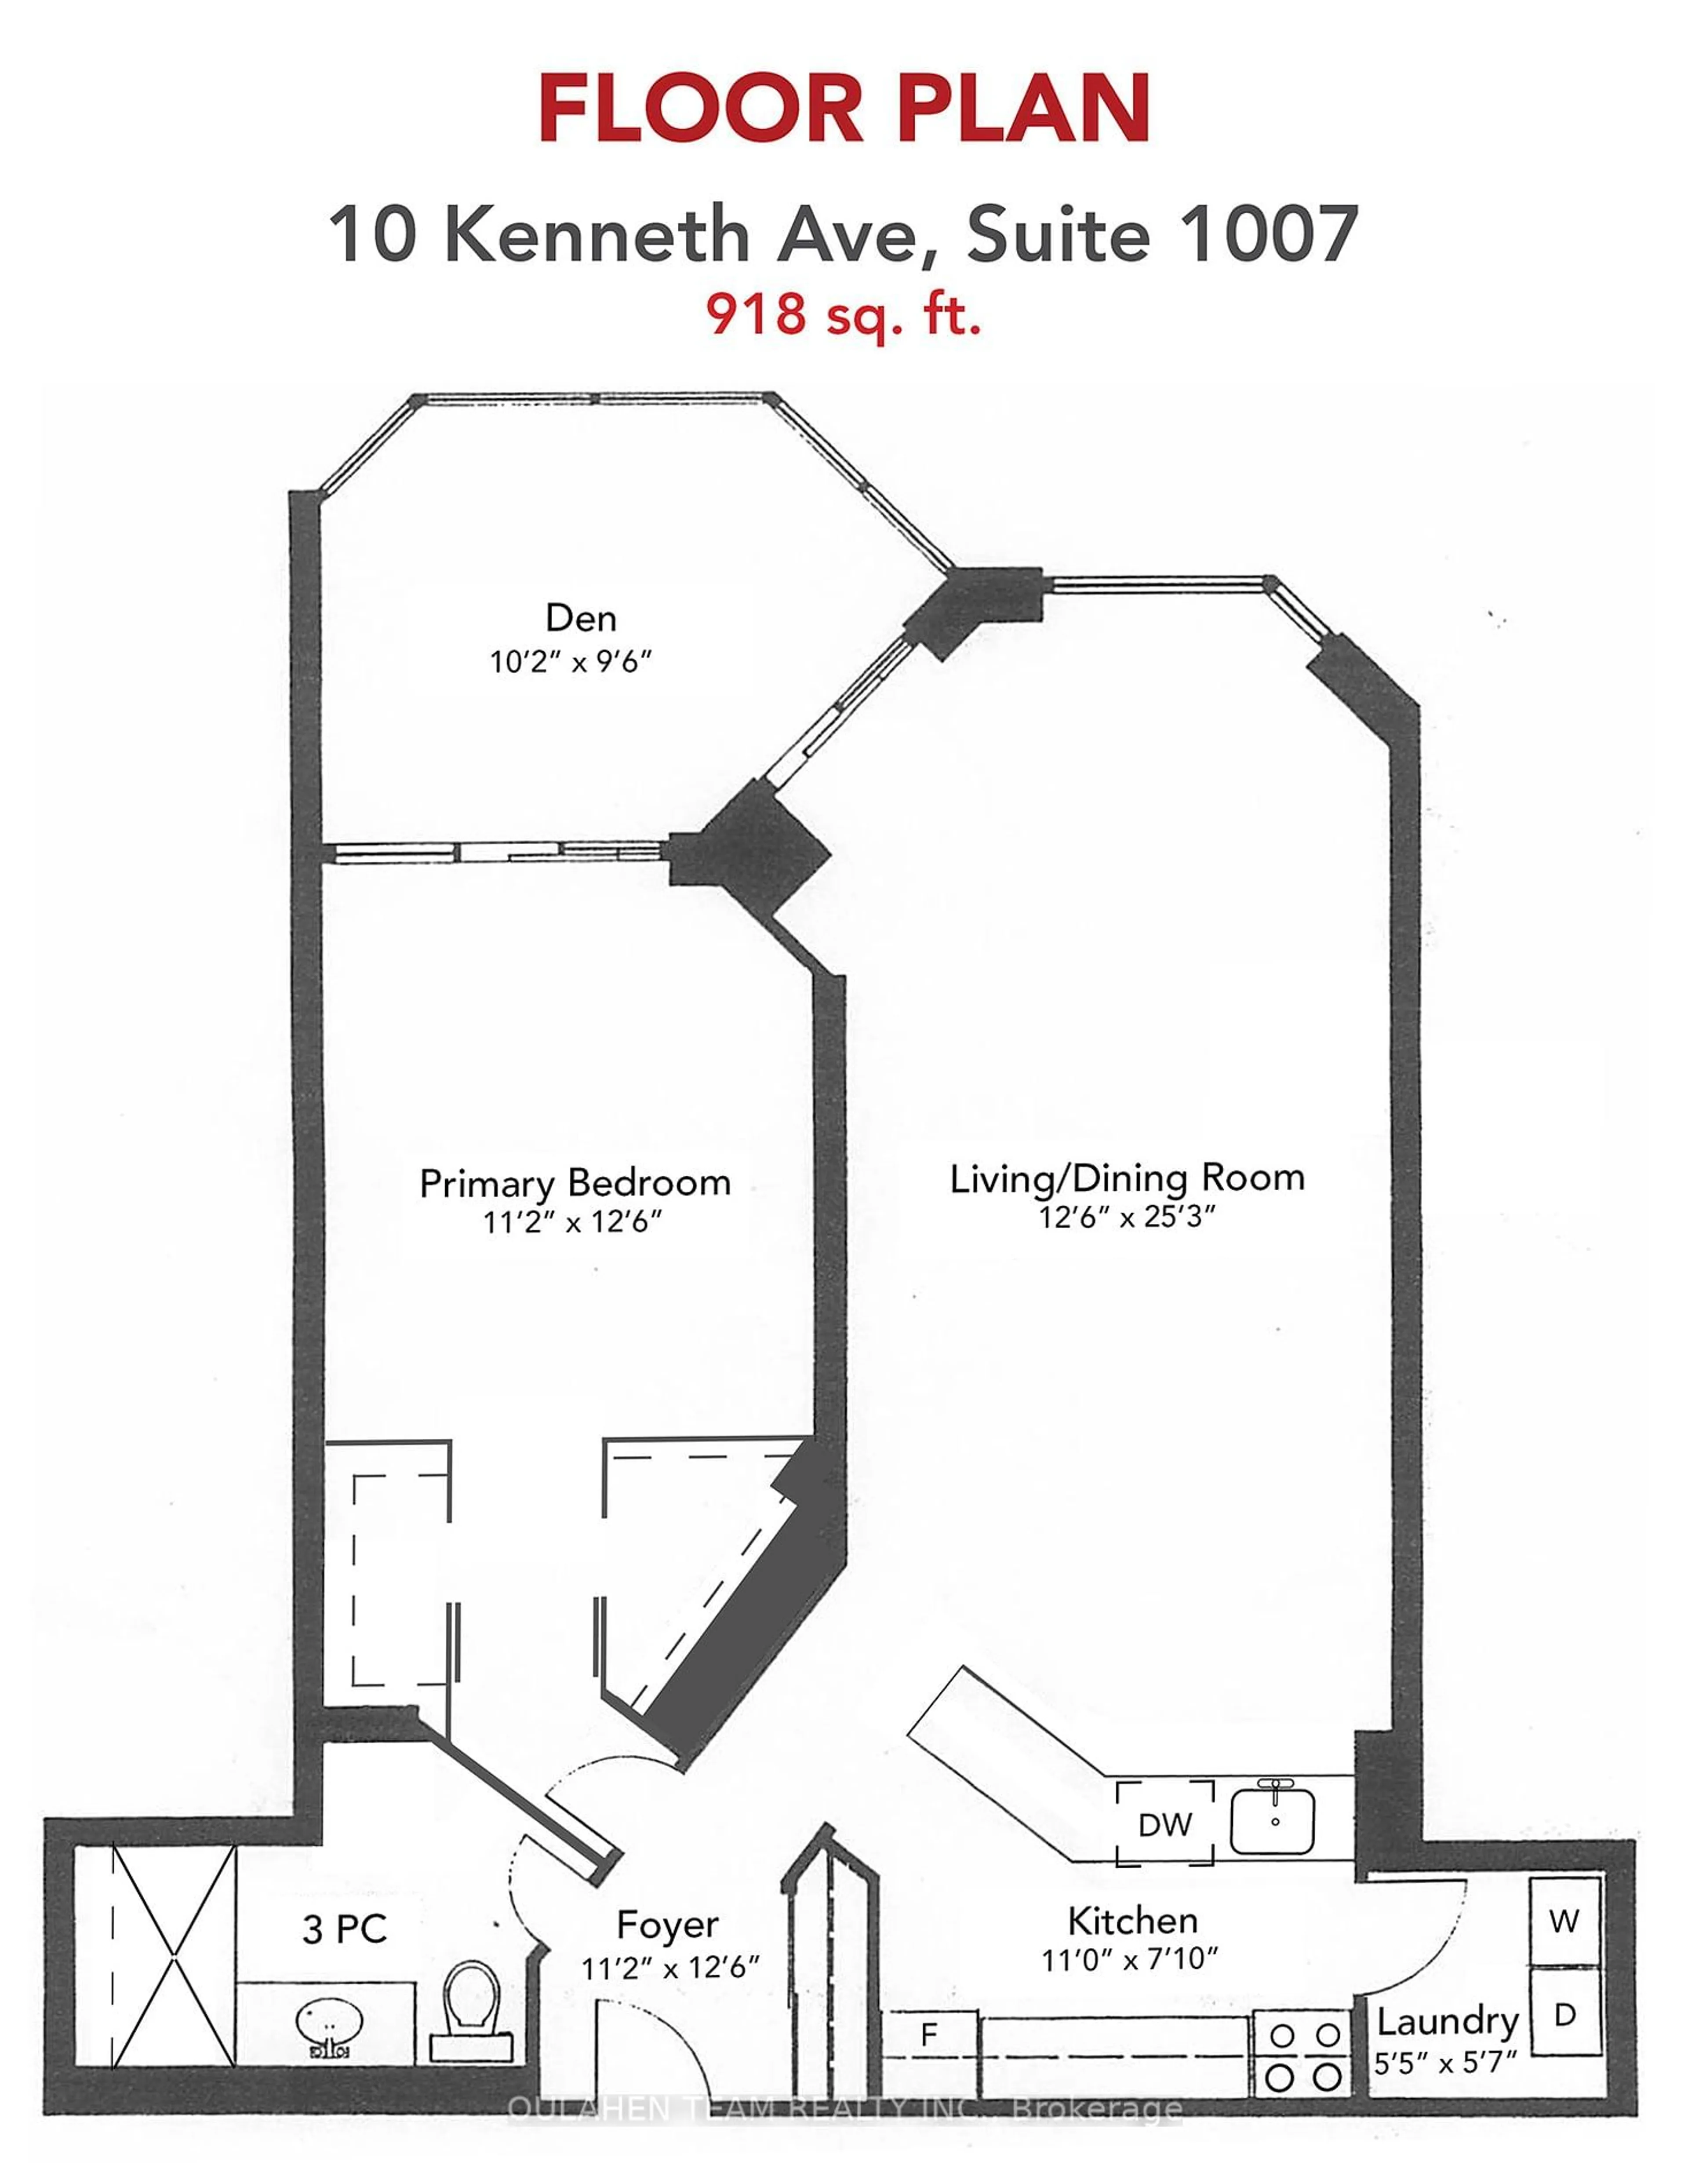 Floor plan for 10 Kenneth Ave #1007, Toronto Ontario M2N 6K6